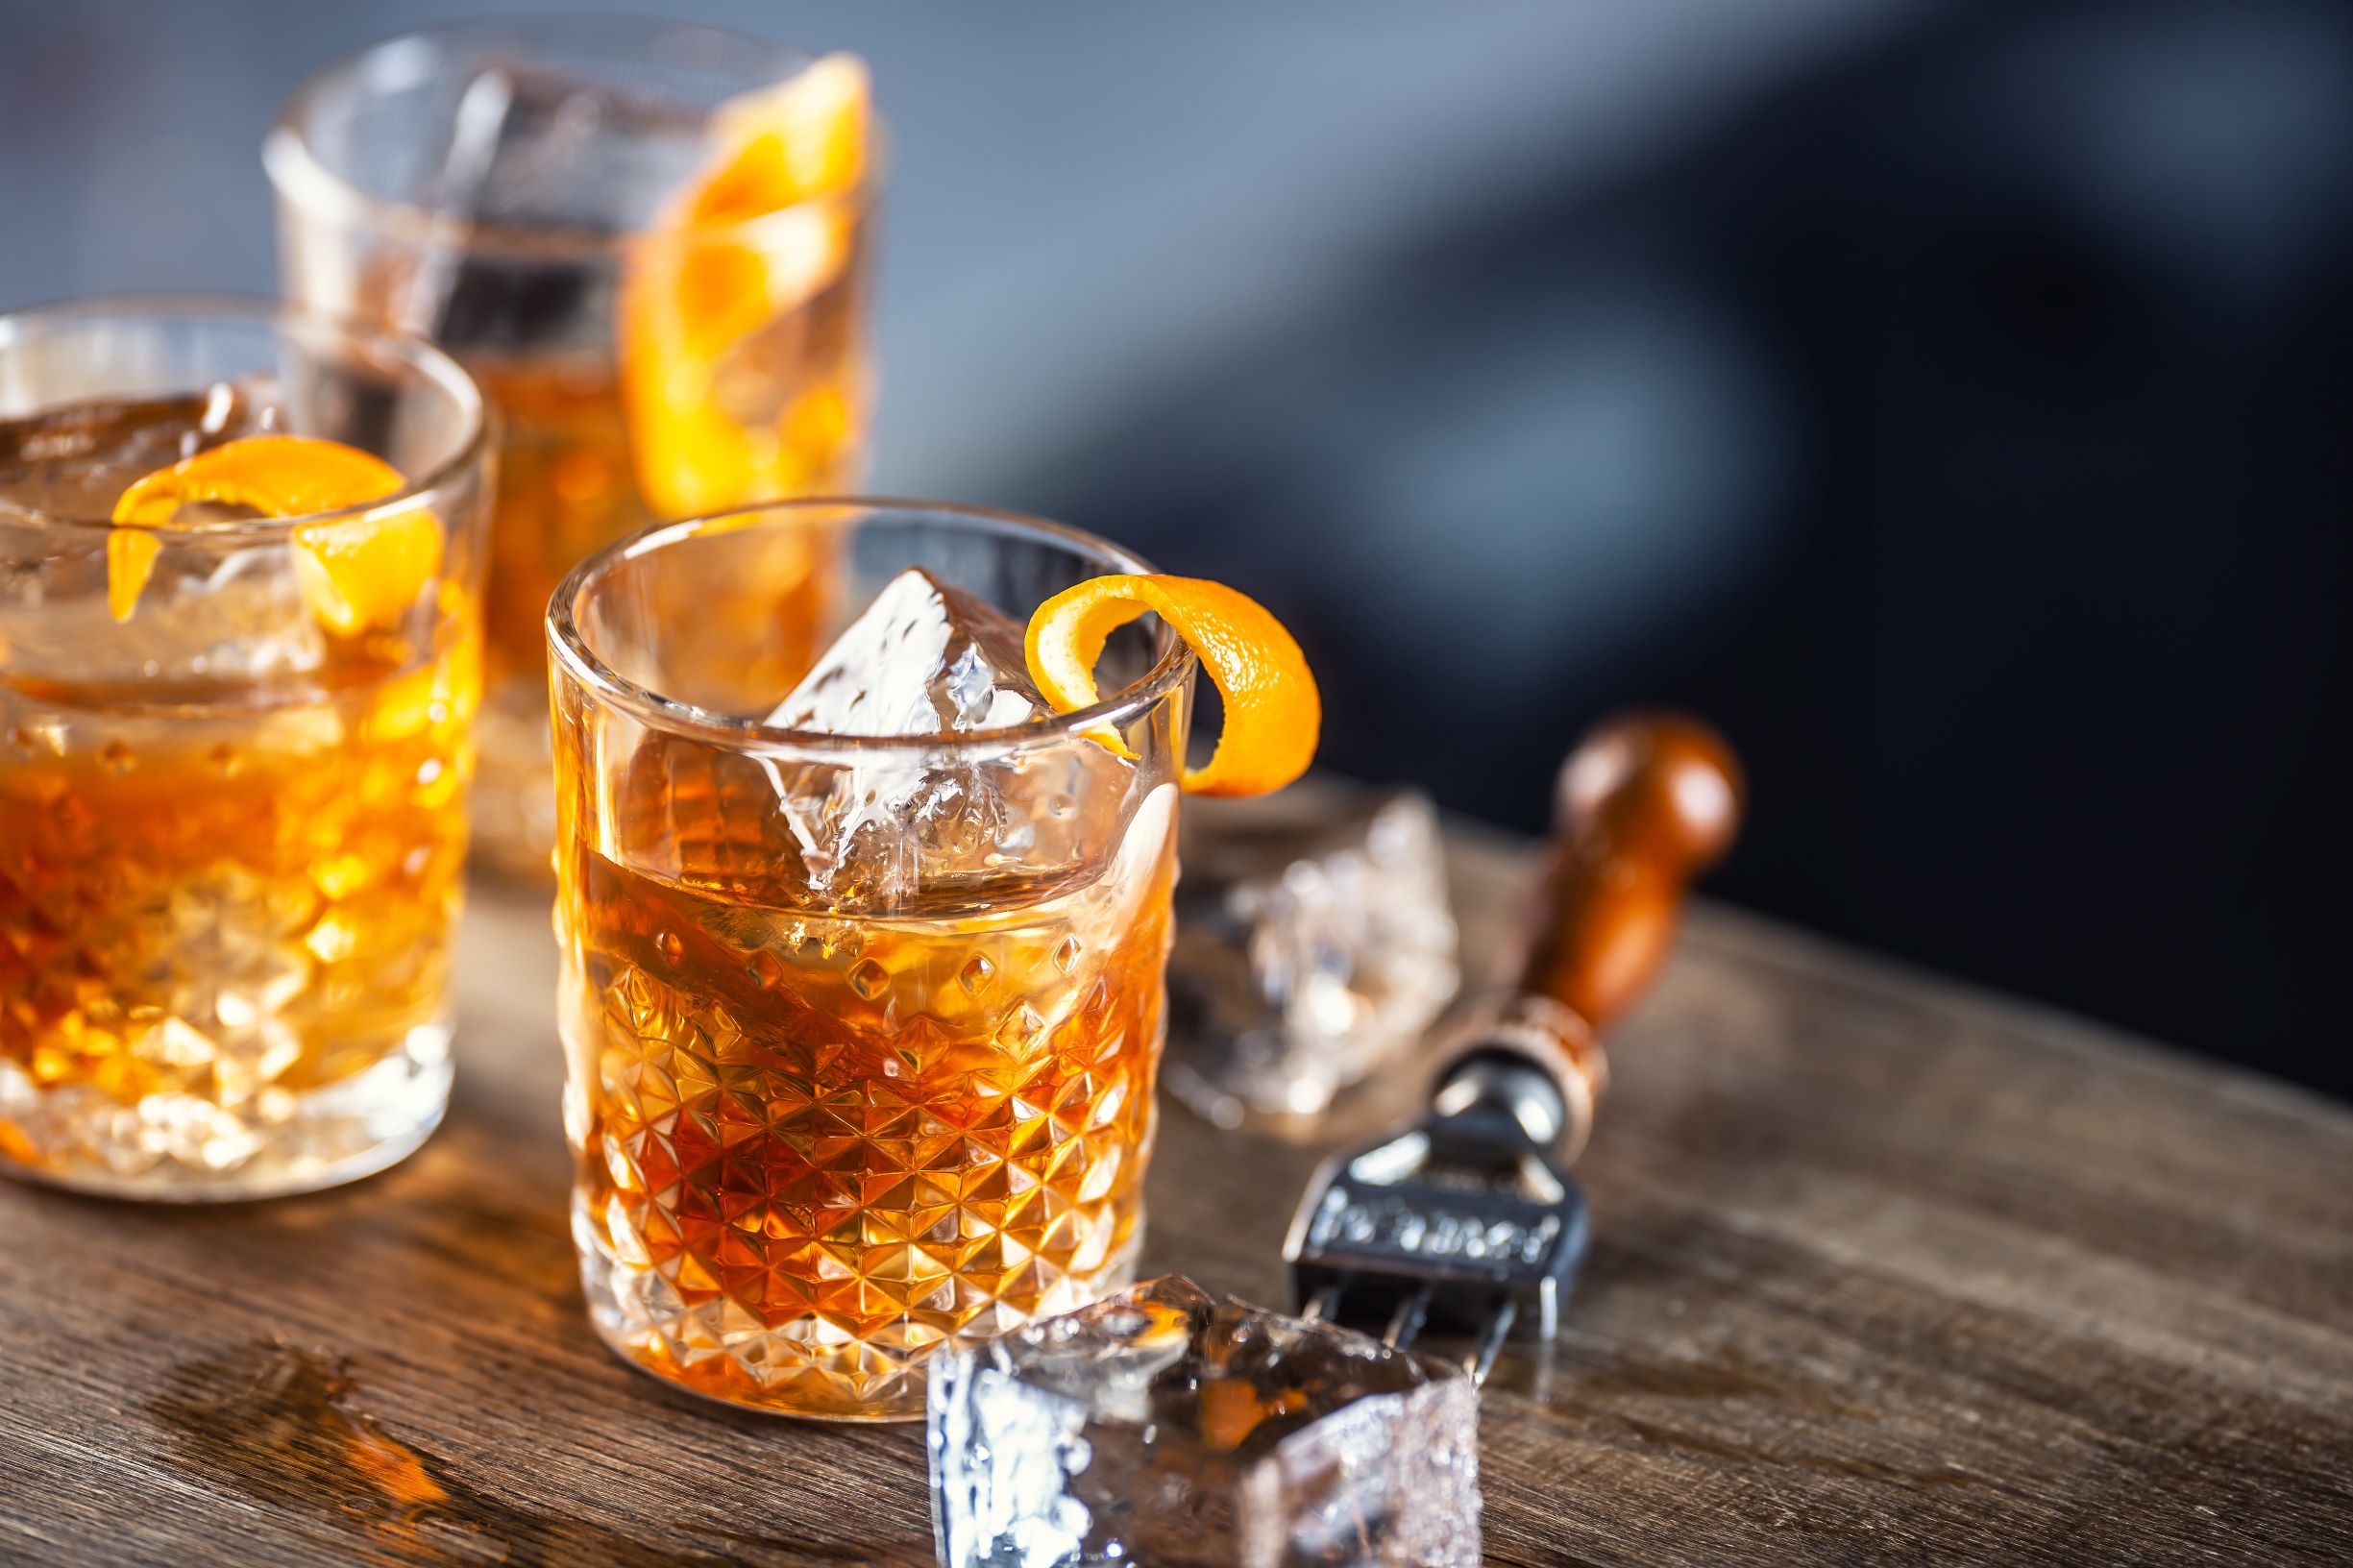 Three old fashioned whiskies with orange peel garnishes.